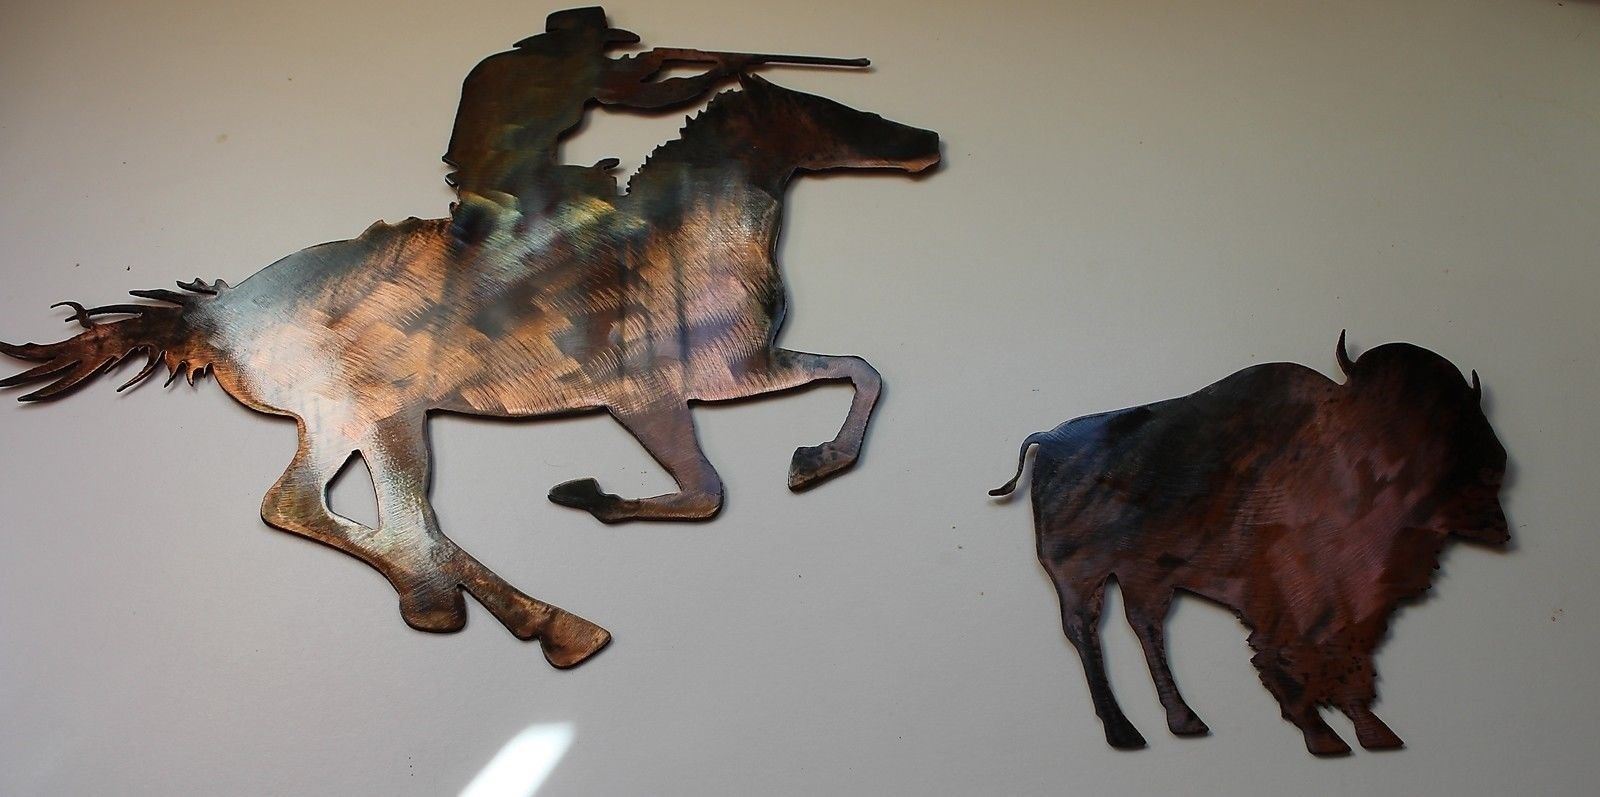 Buffalo Hunting Cowboy Set Metal Wall Art copper/bronze plated - size varies - $47.48